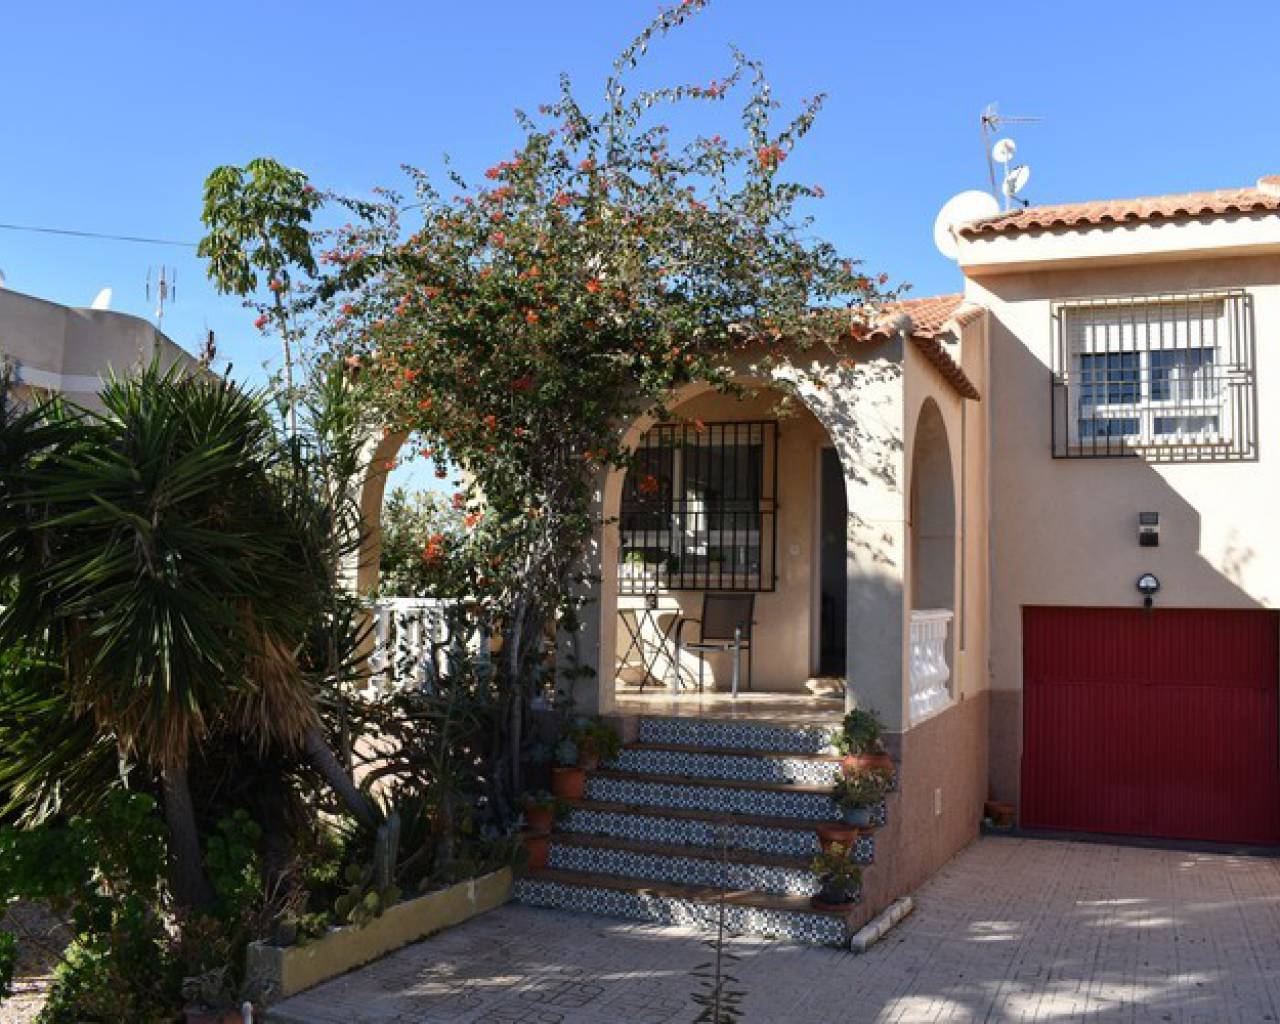 For sale: 2 bedroom house / villa in La Siesta, Costa Blanca